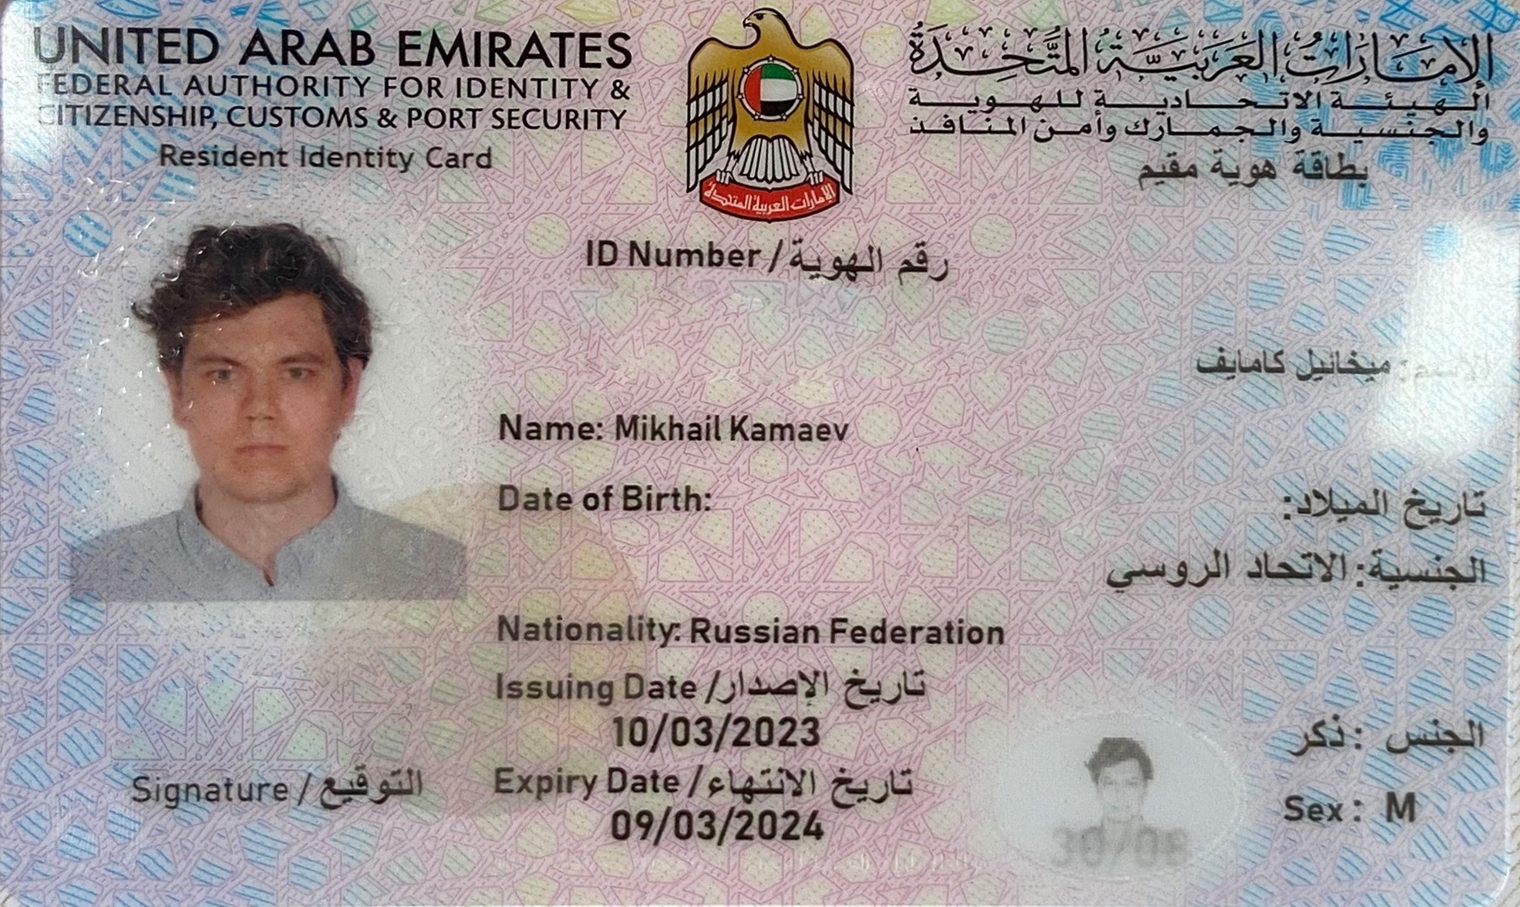 А так выглядит карта Emirates ID